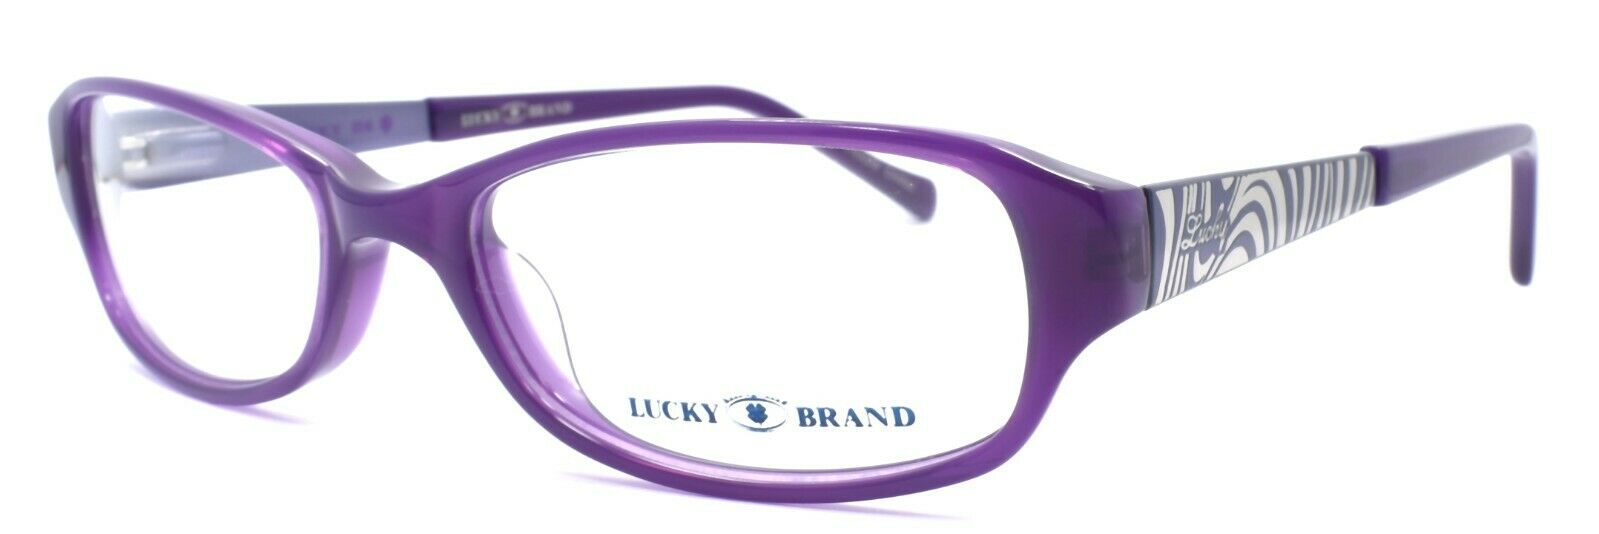 1-LUCKY BRAND Jade Kids Girls Eyeglasses Frames 48-16-130 Purple + CASE-751286136531-IKSpecs